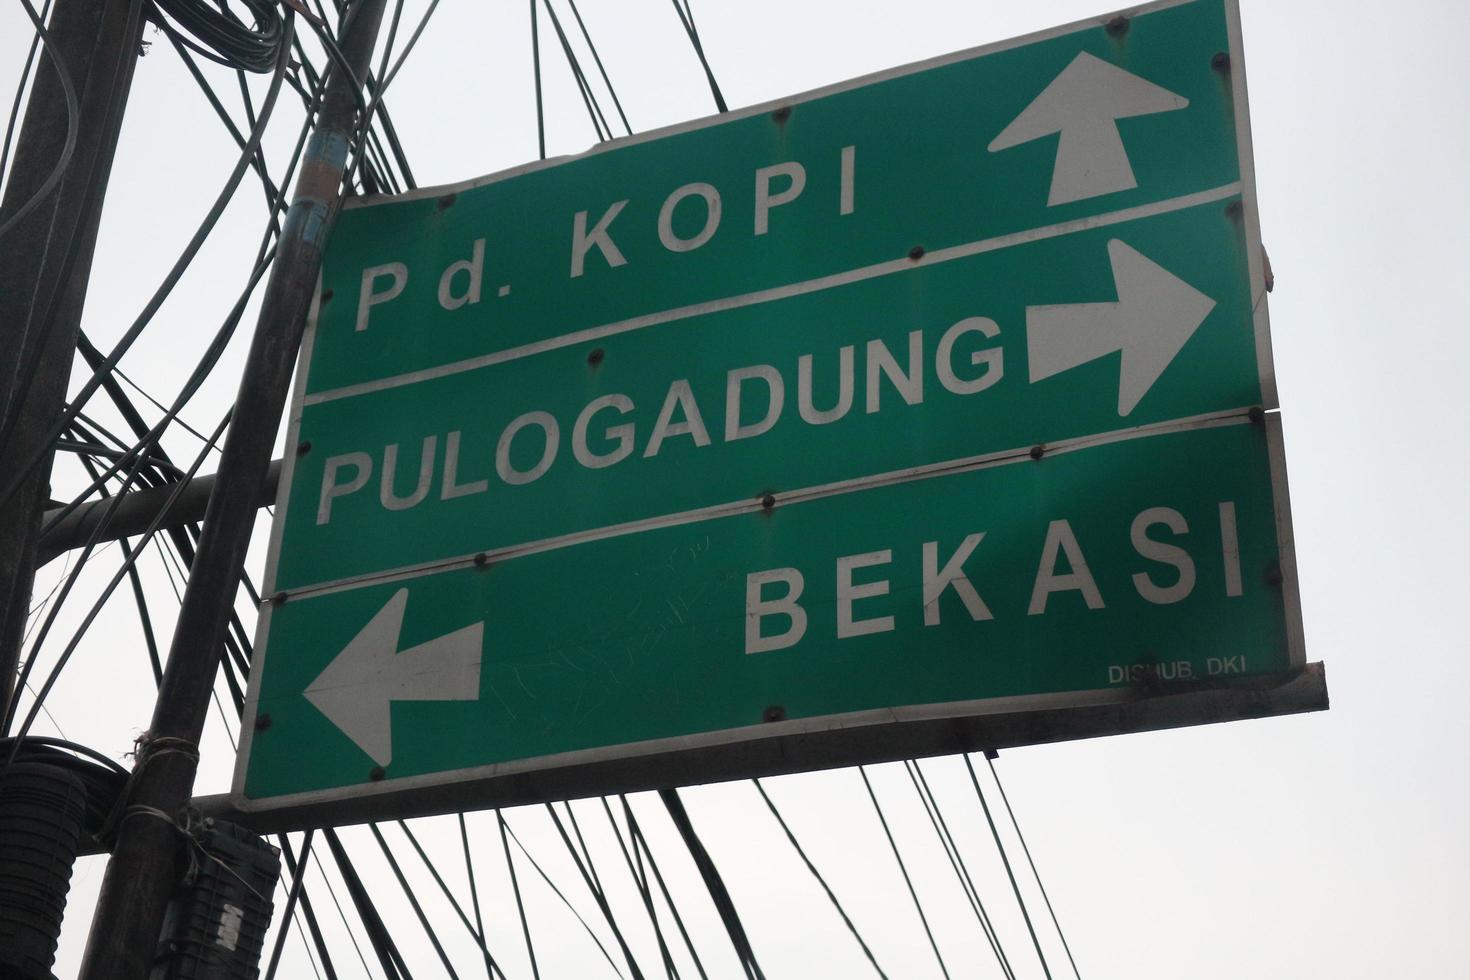 bekasi, Indonesia su luglio 2022. segni per indicazioni per stagnok kopi, Pulo gadung e bekasi. foto